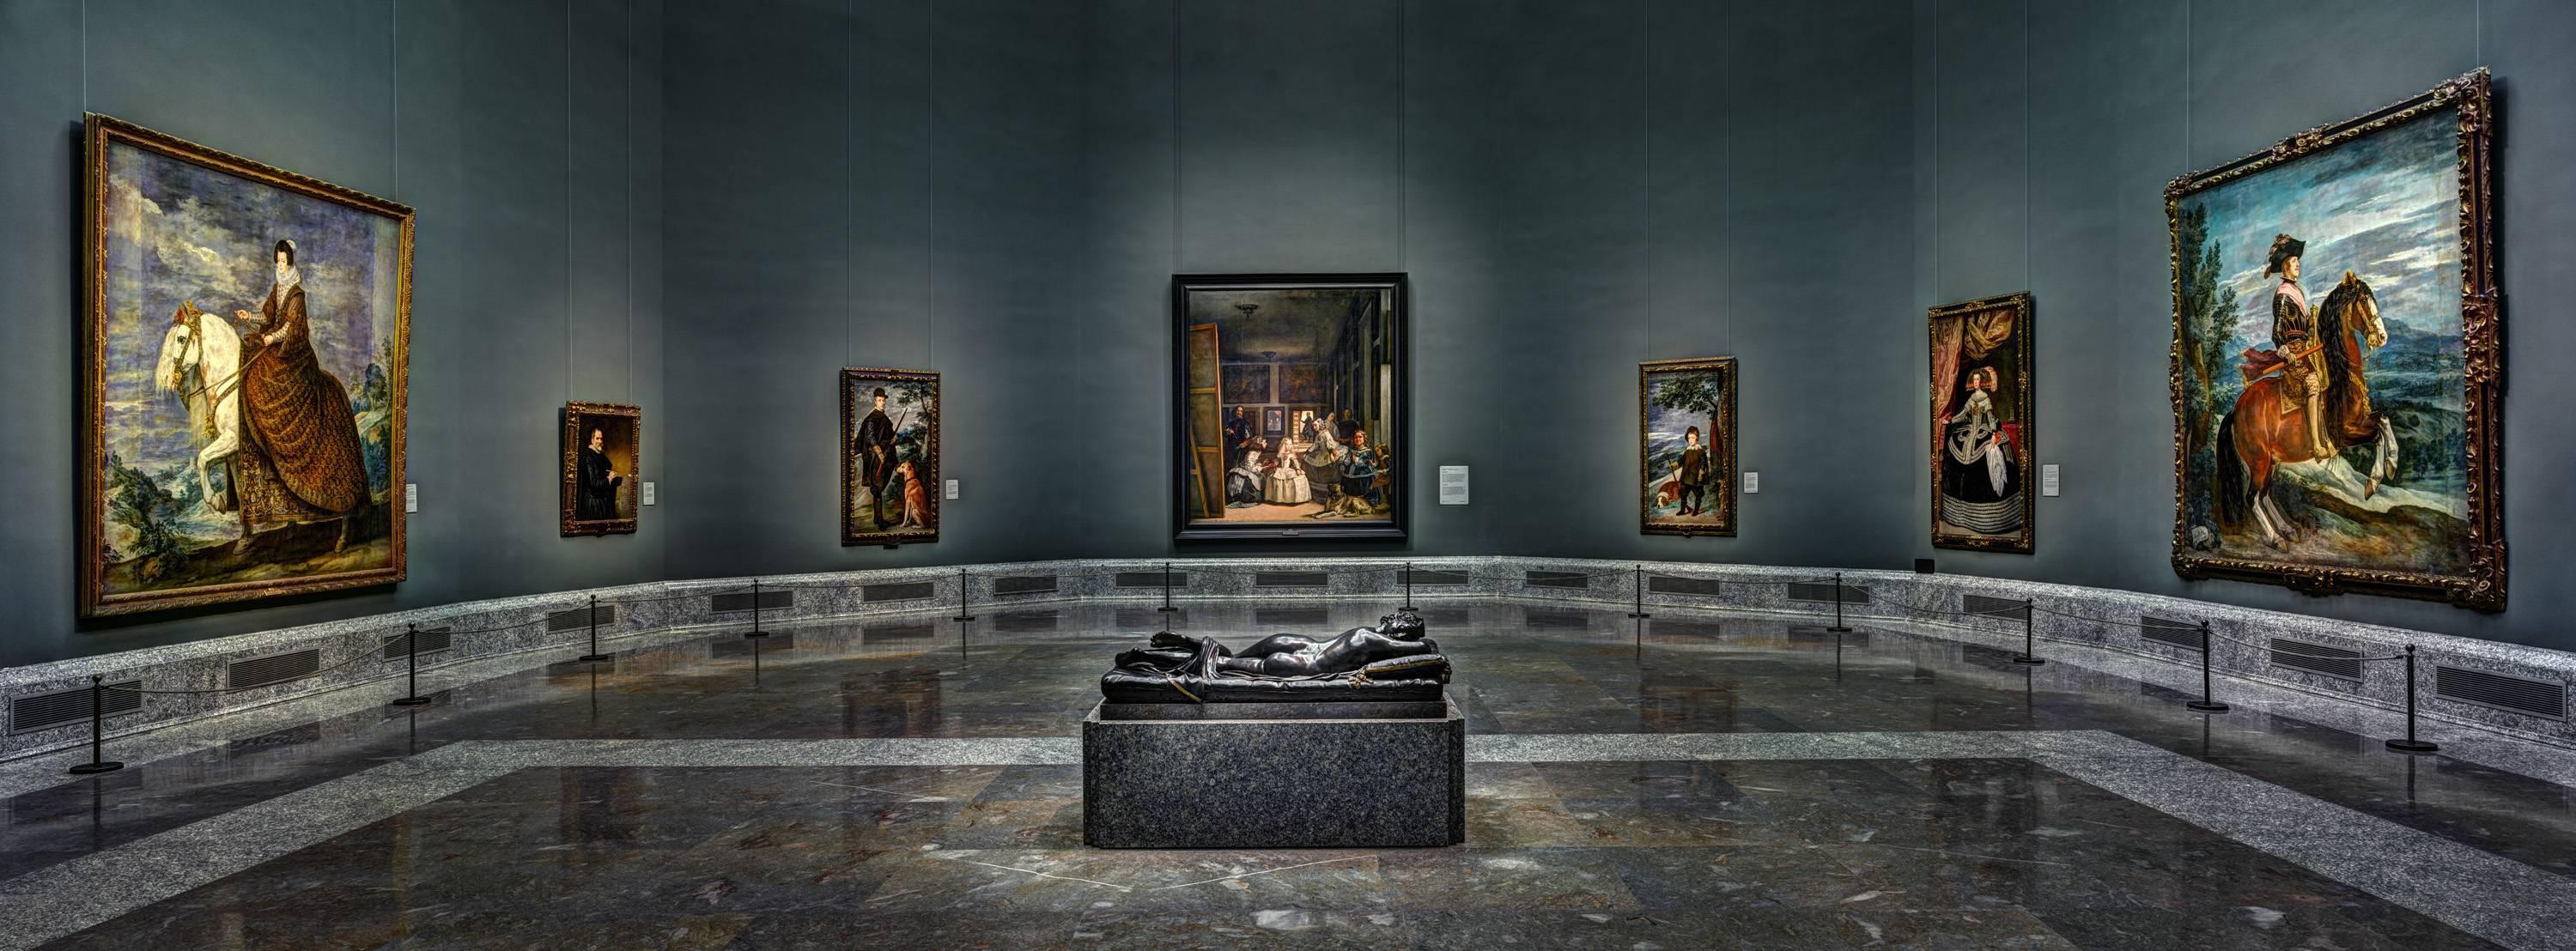 Christian Voigt Still-Life Photograph - Central Gallery Prado